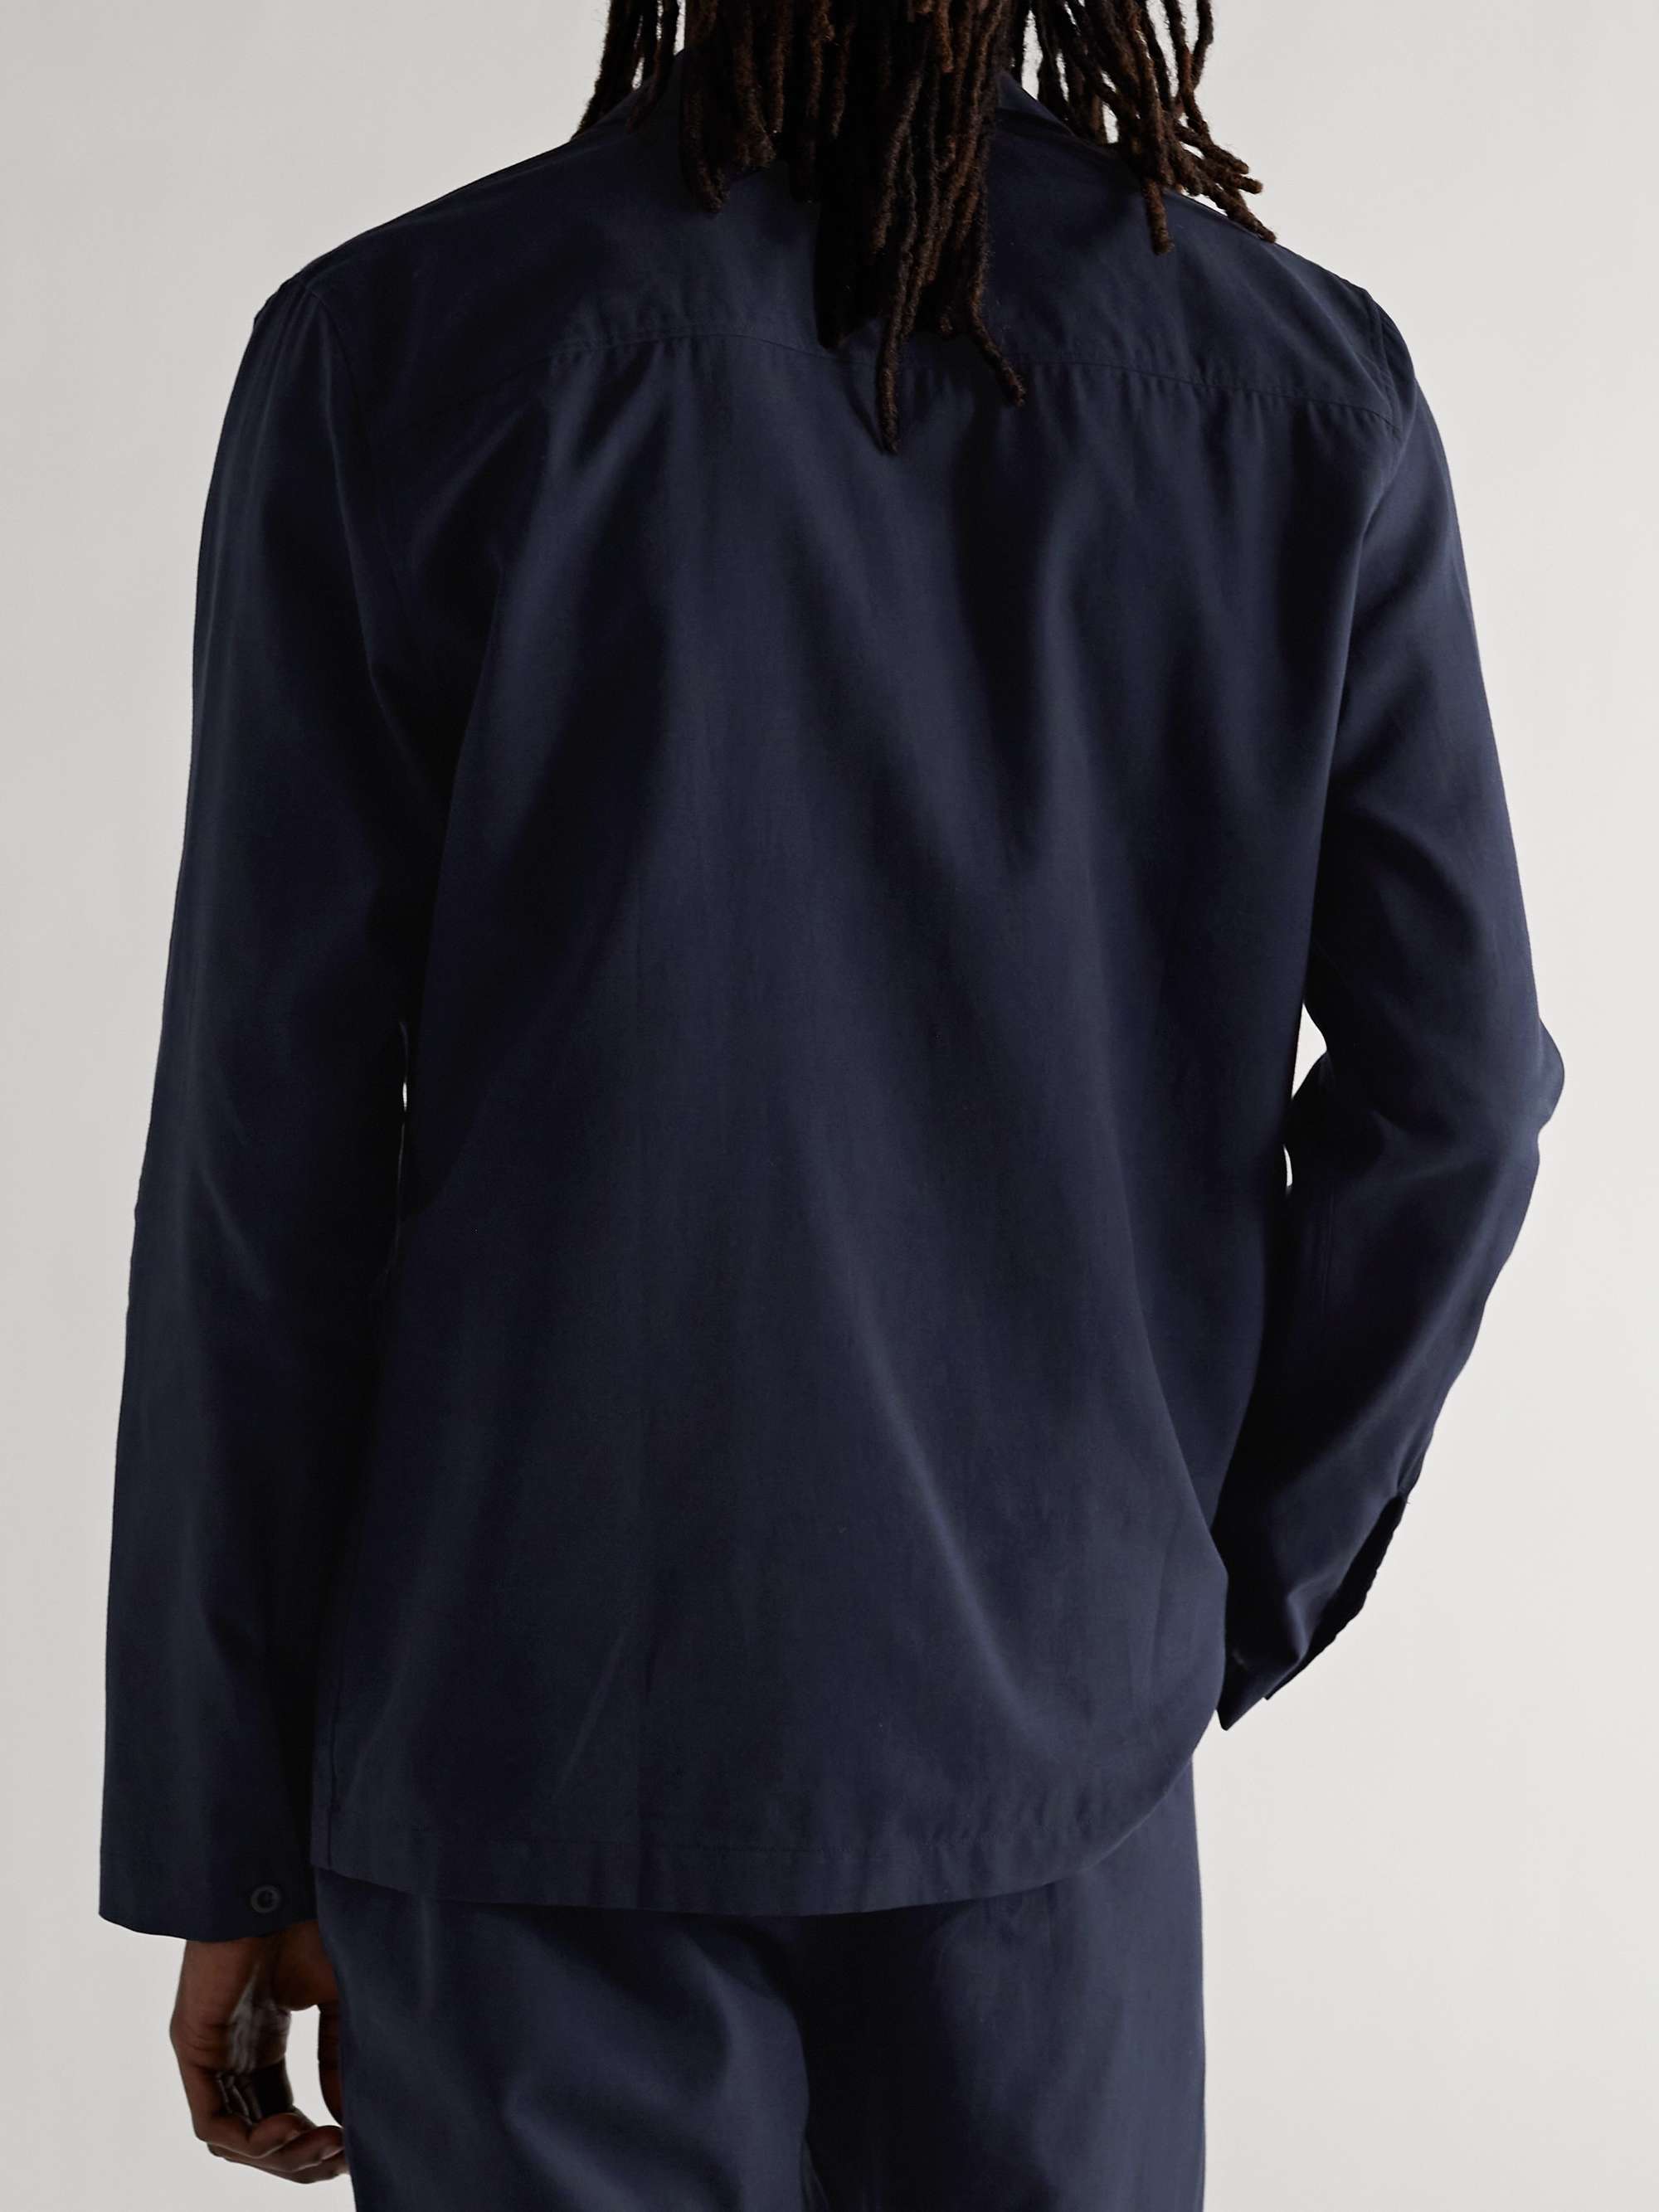 SUNSPEL Camp-Collar Cotton-Twill Pyjama Shirt